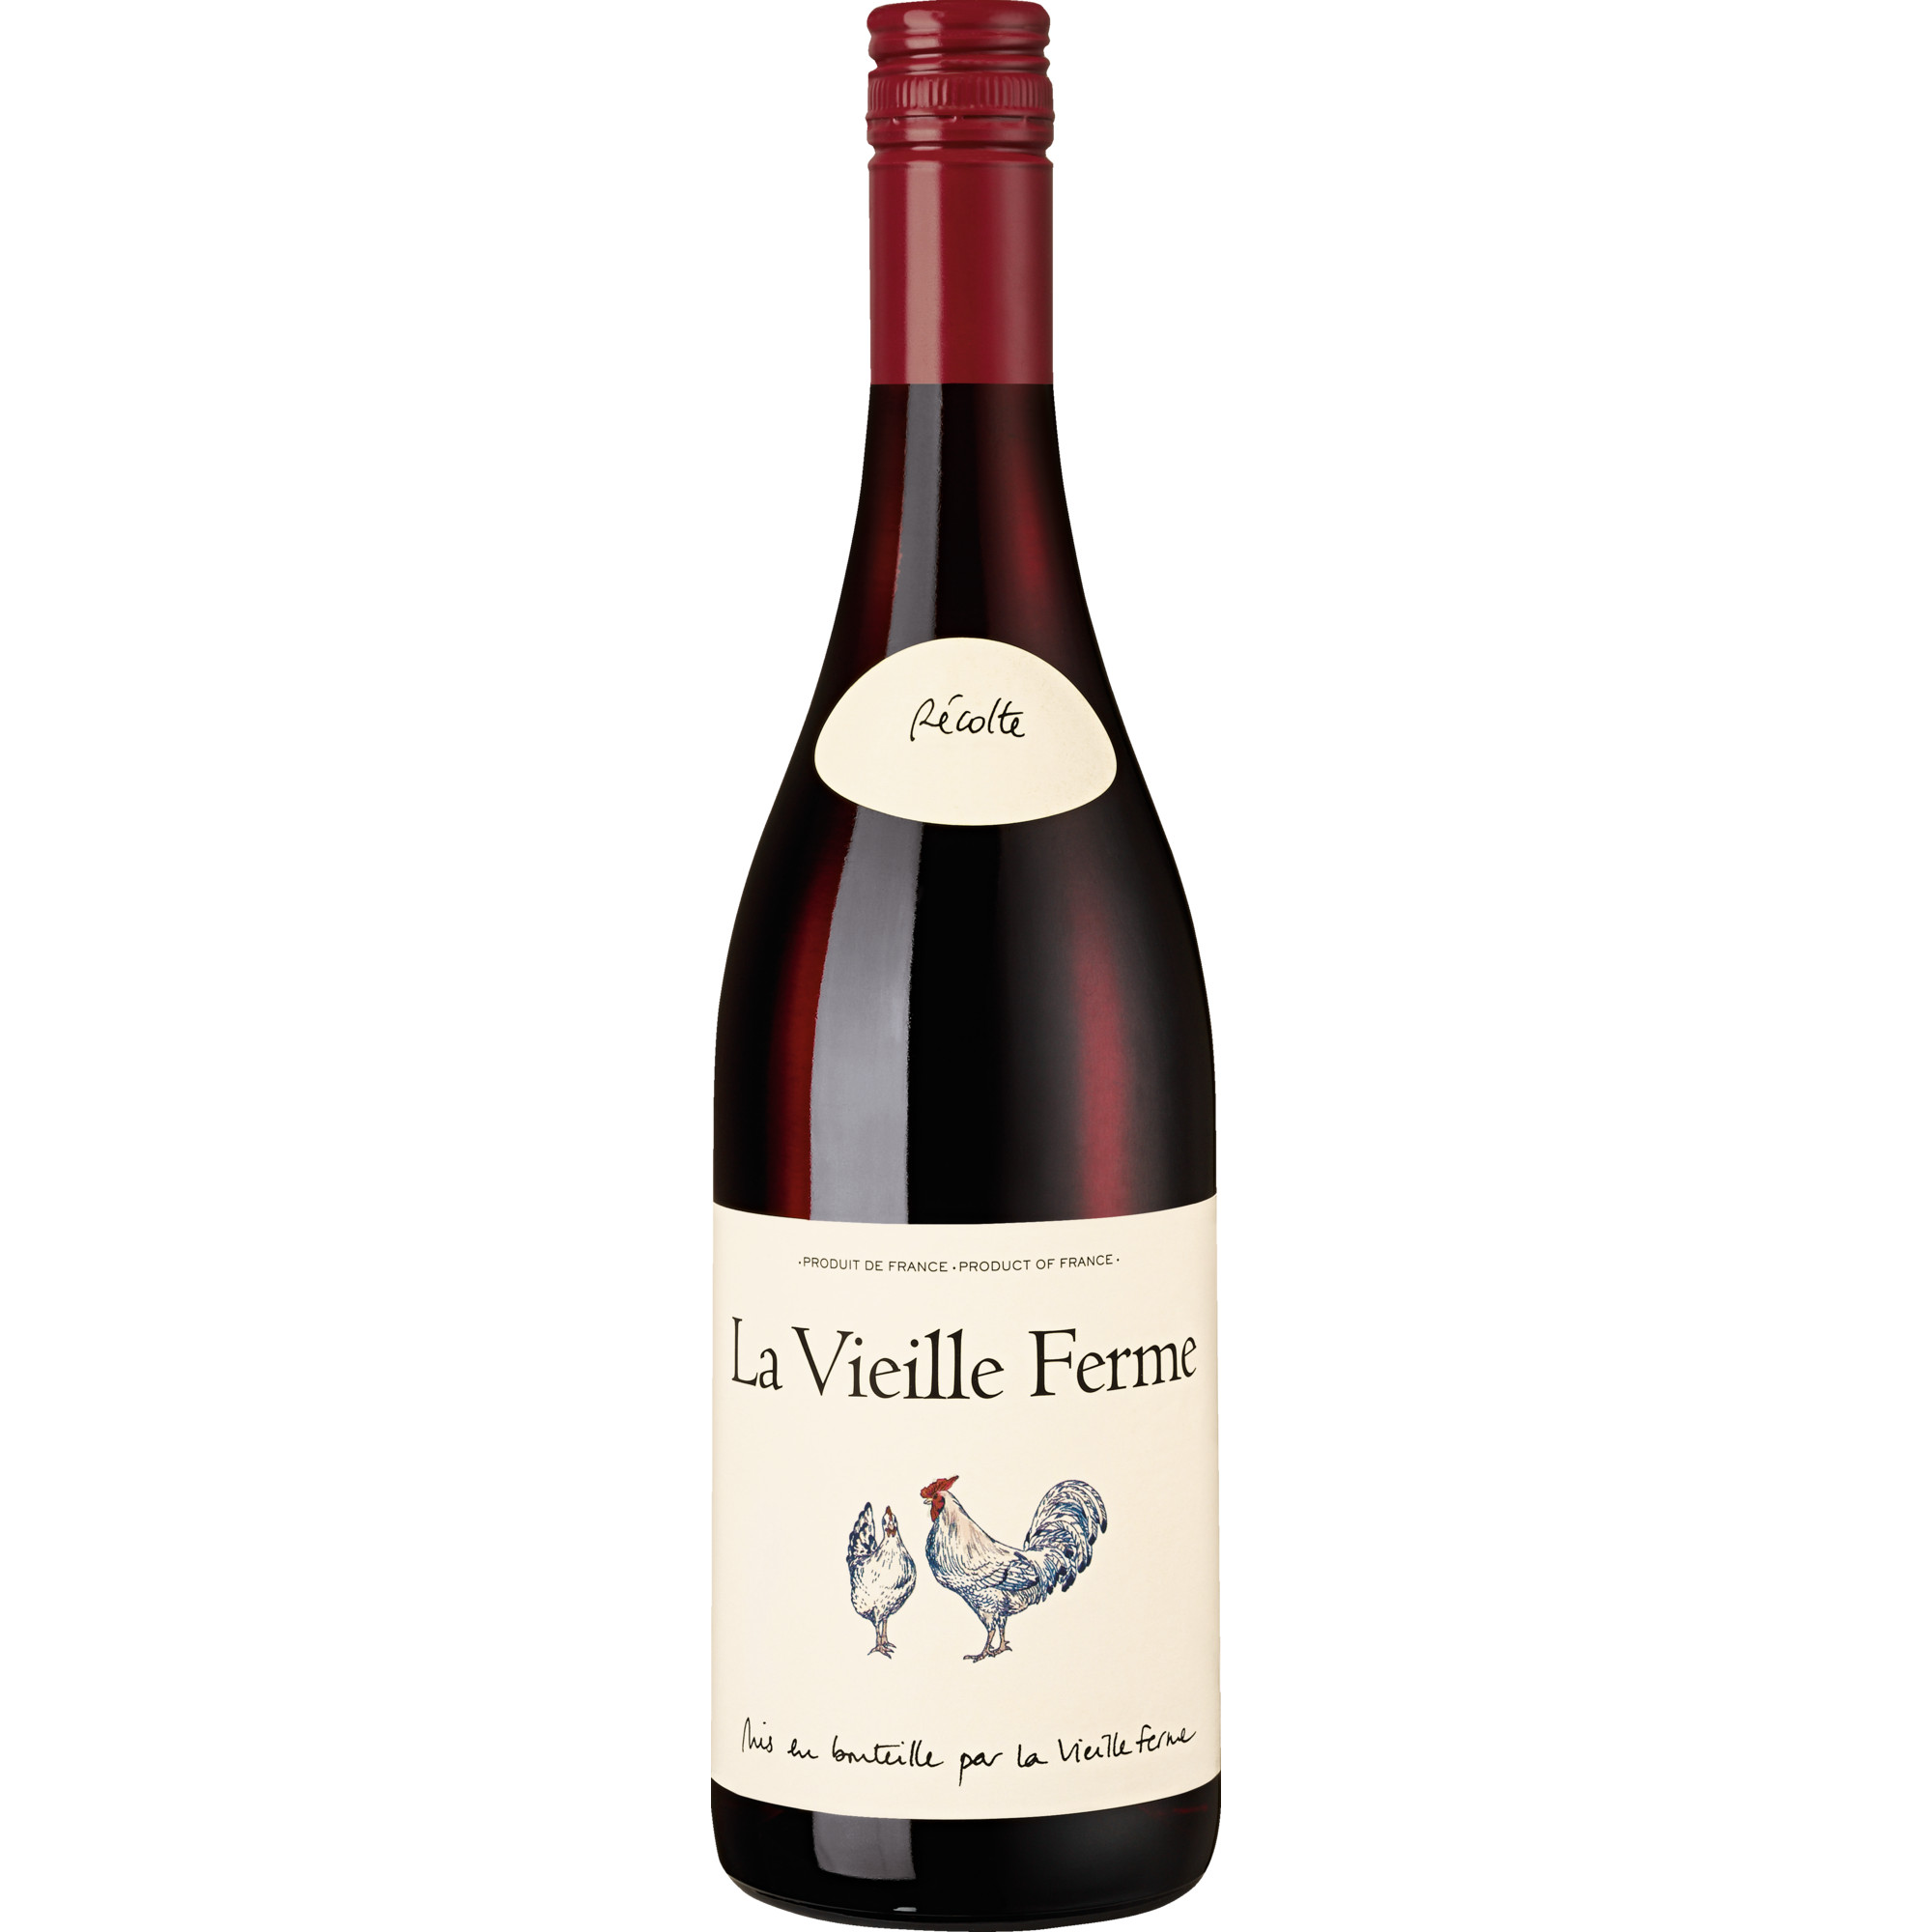 La Vieille Ferme rouge, Vin de France, Vin de France, 2020, Rotwein  Rotwein Hawesko